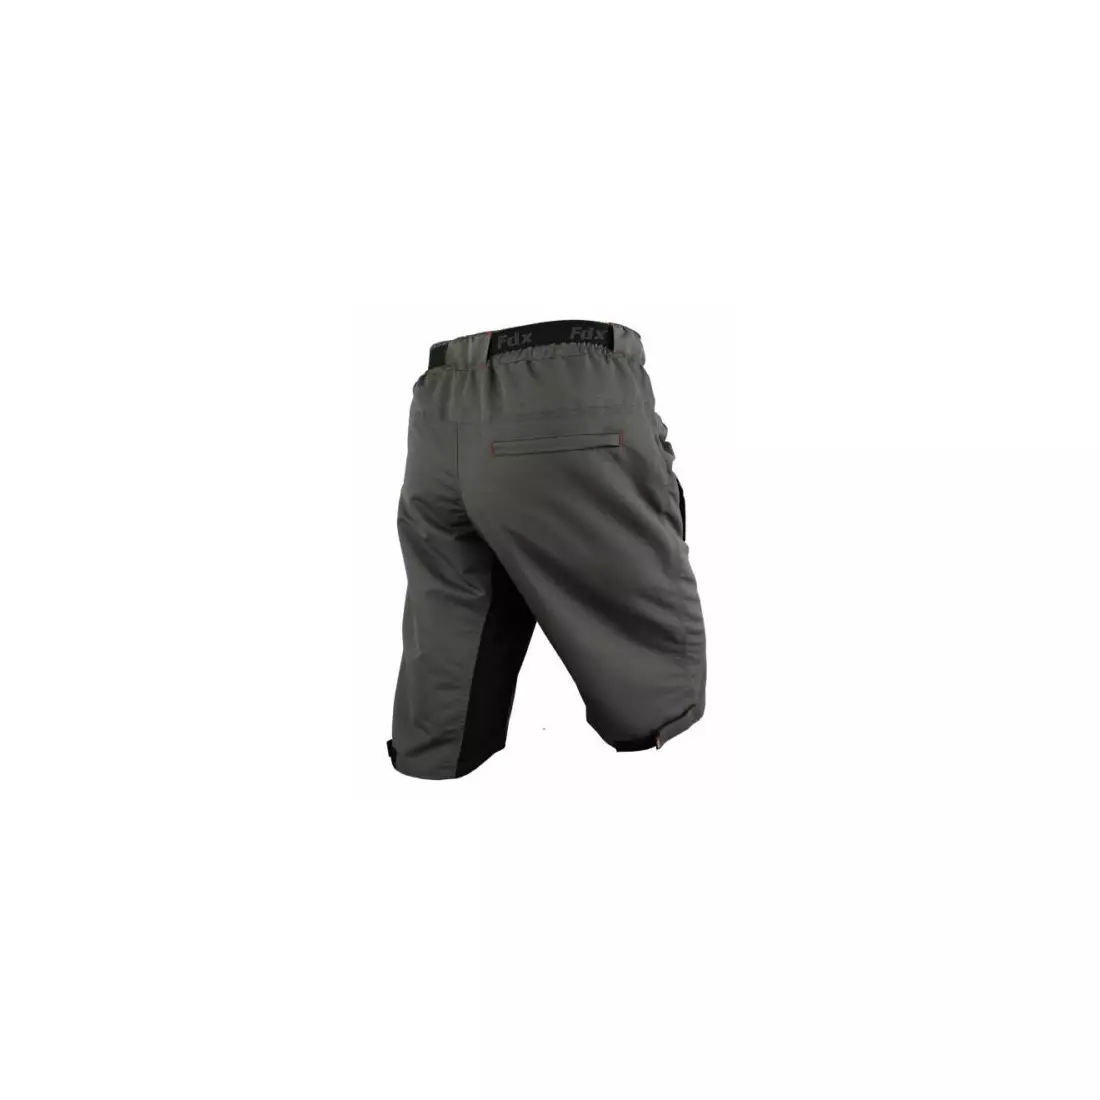 FDX 2010 men's MTB cycling shorts black and gray